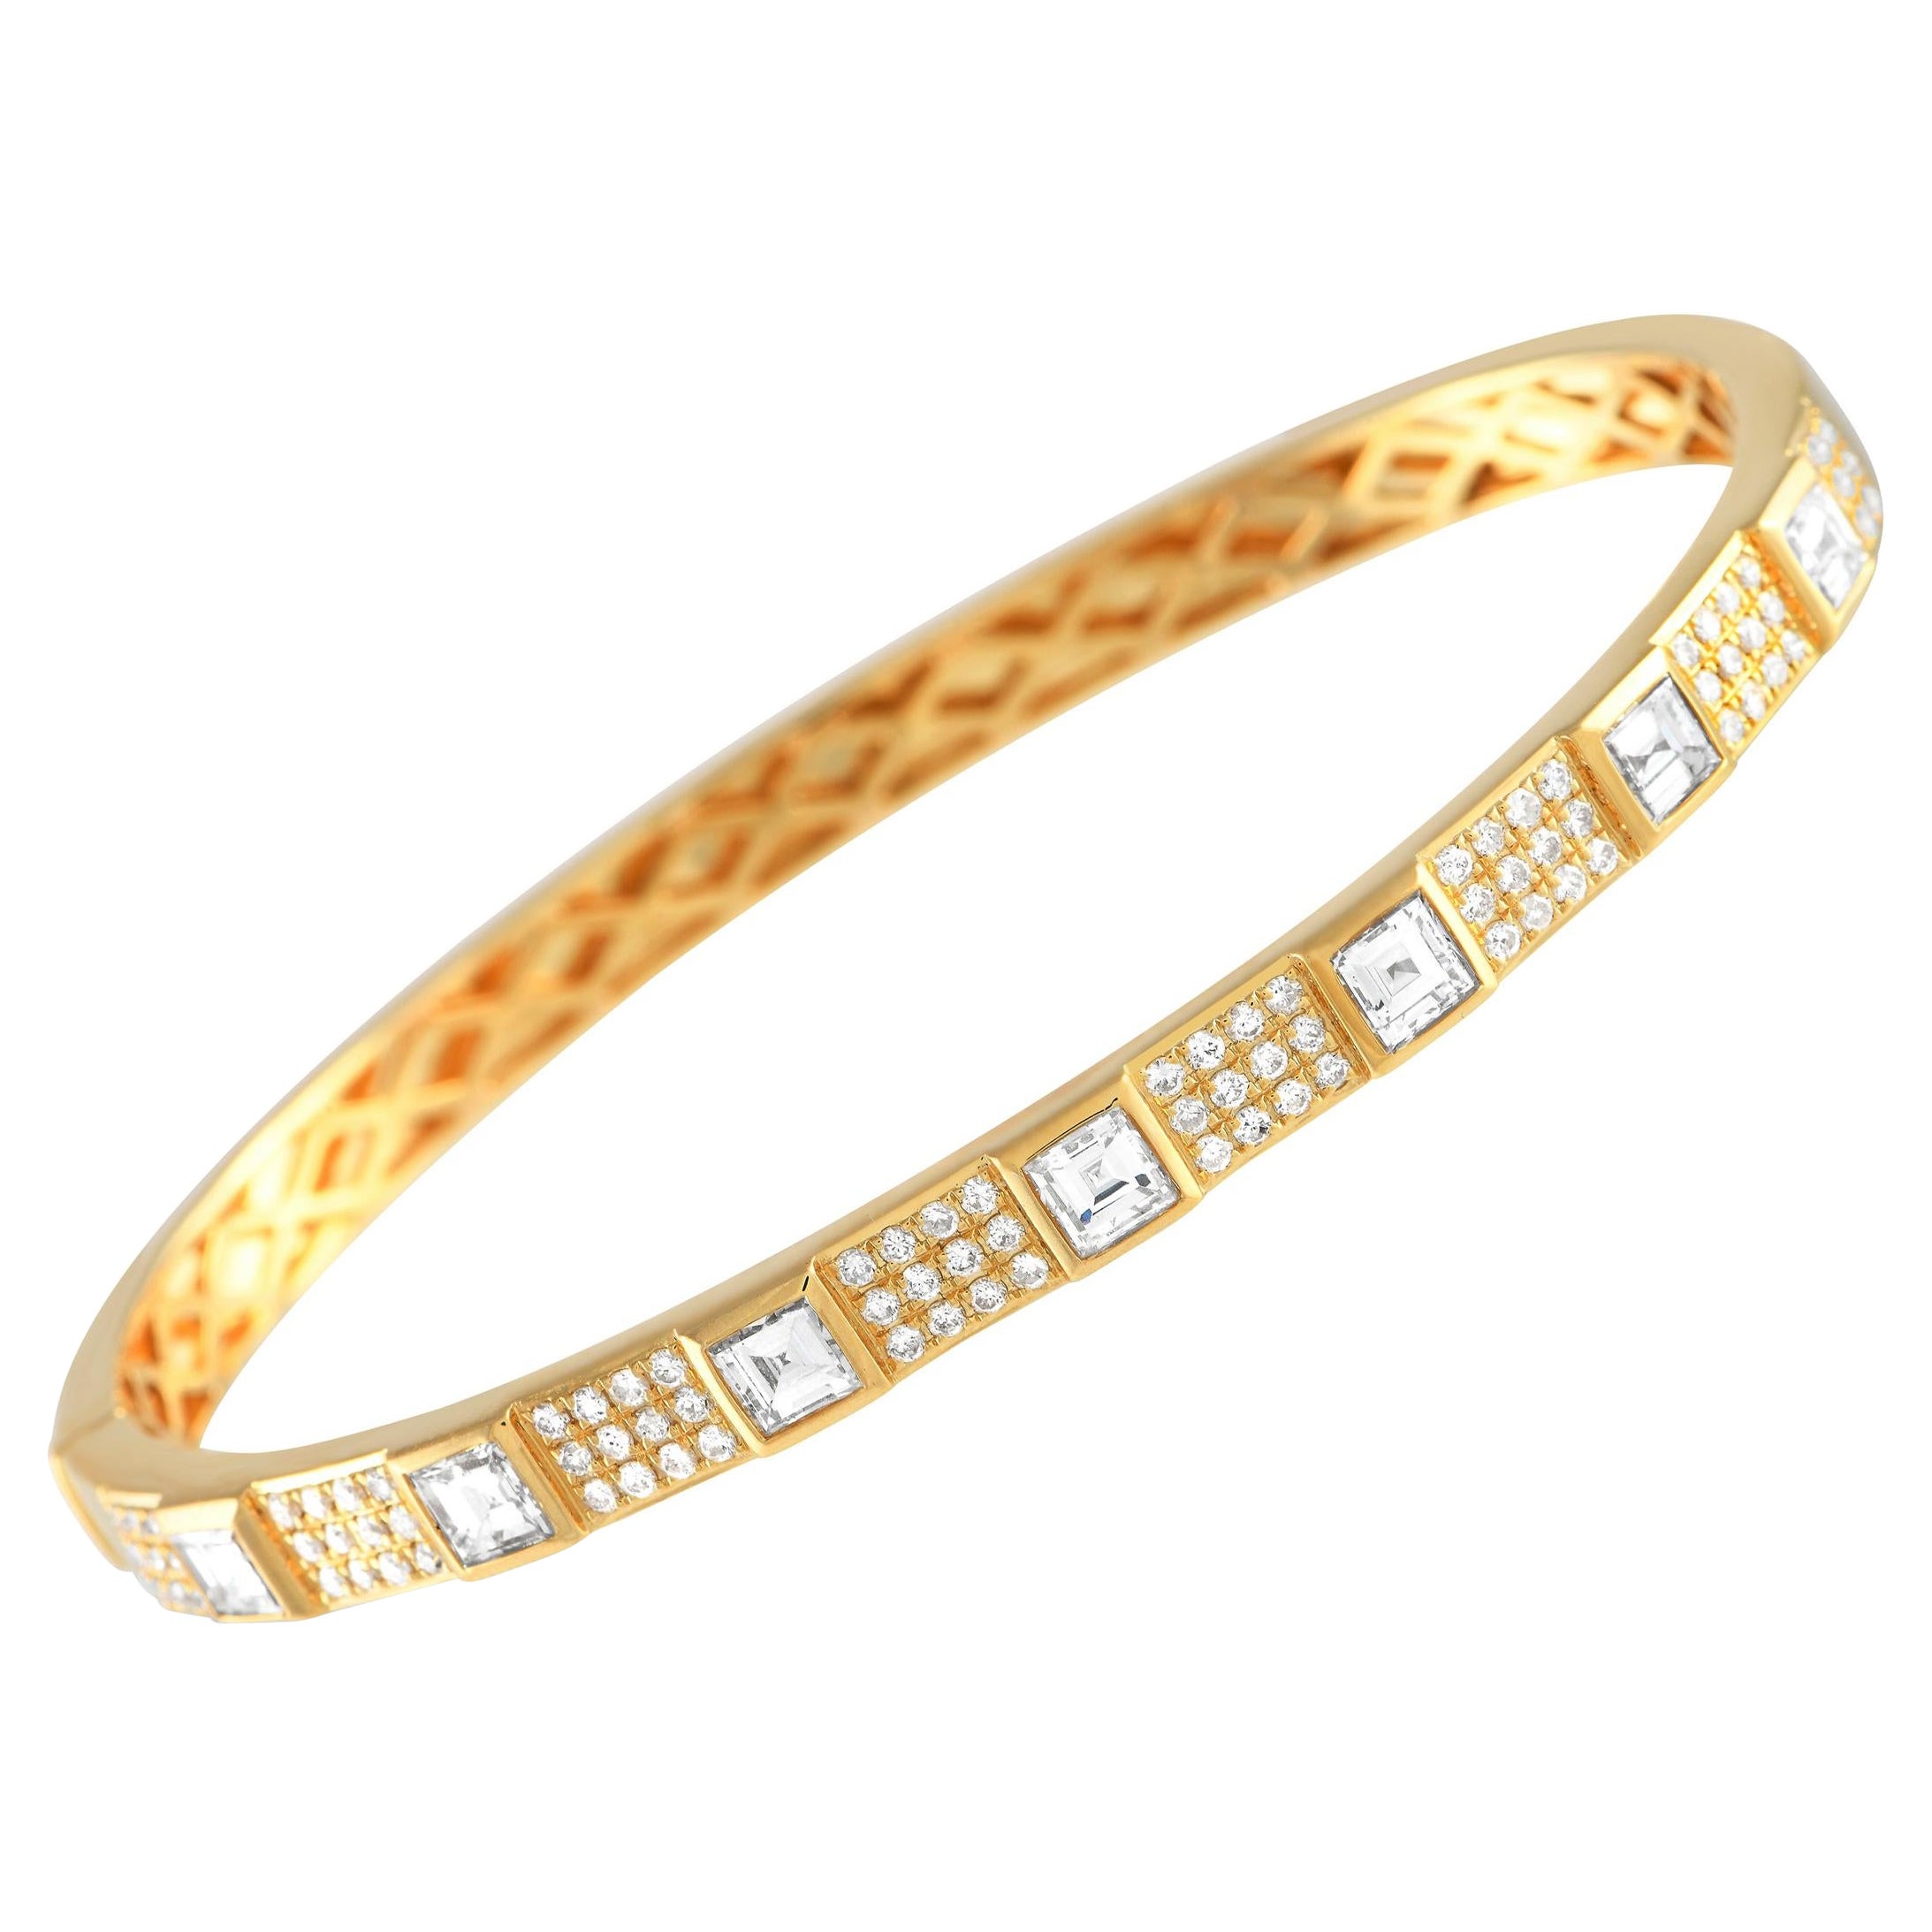 LB Exclusive 18K Yellow Gold 2.65ct Diamond Bracelet